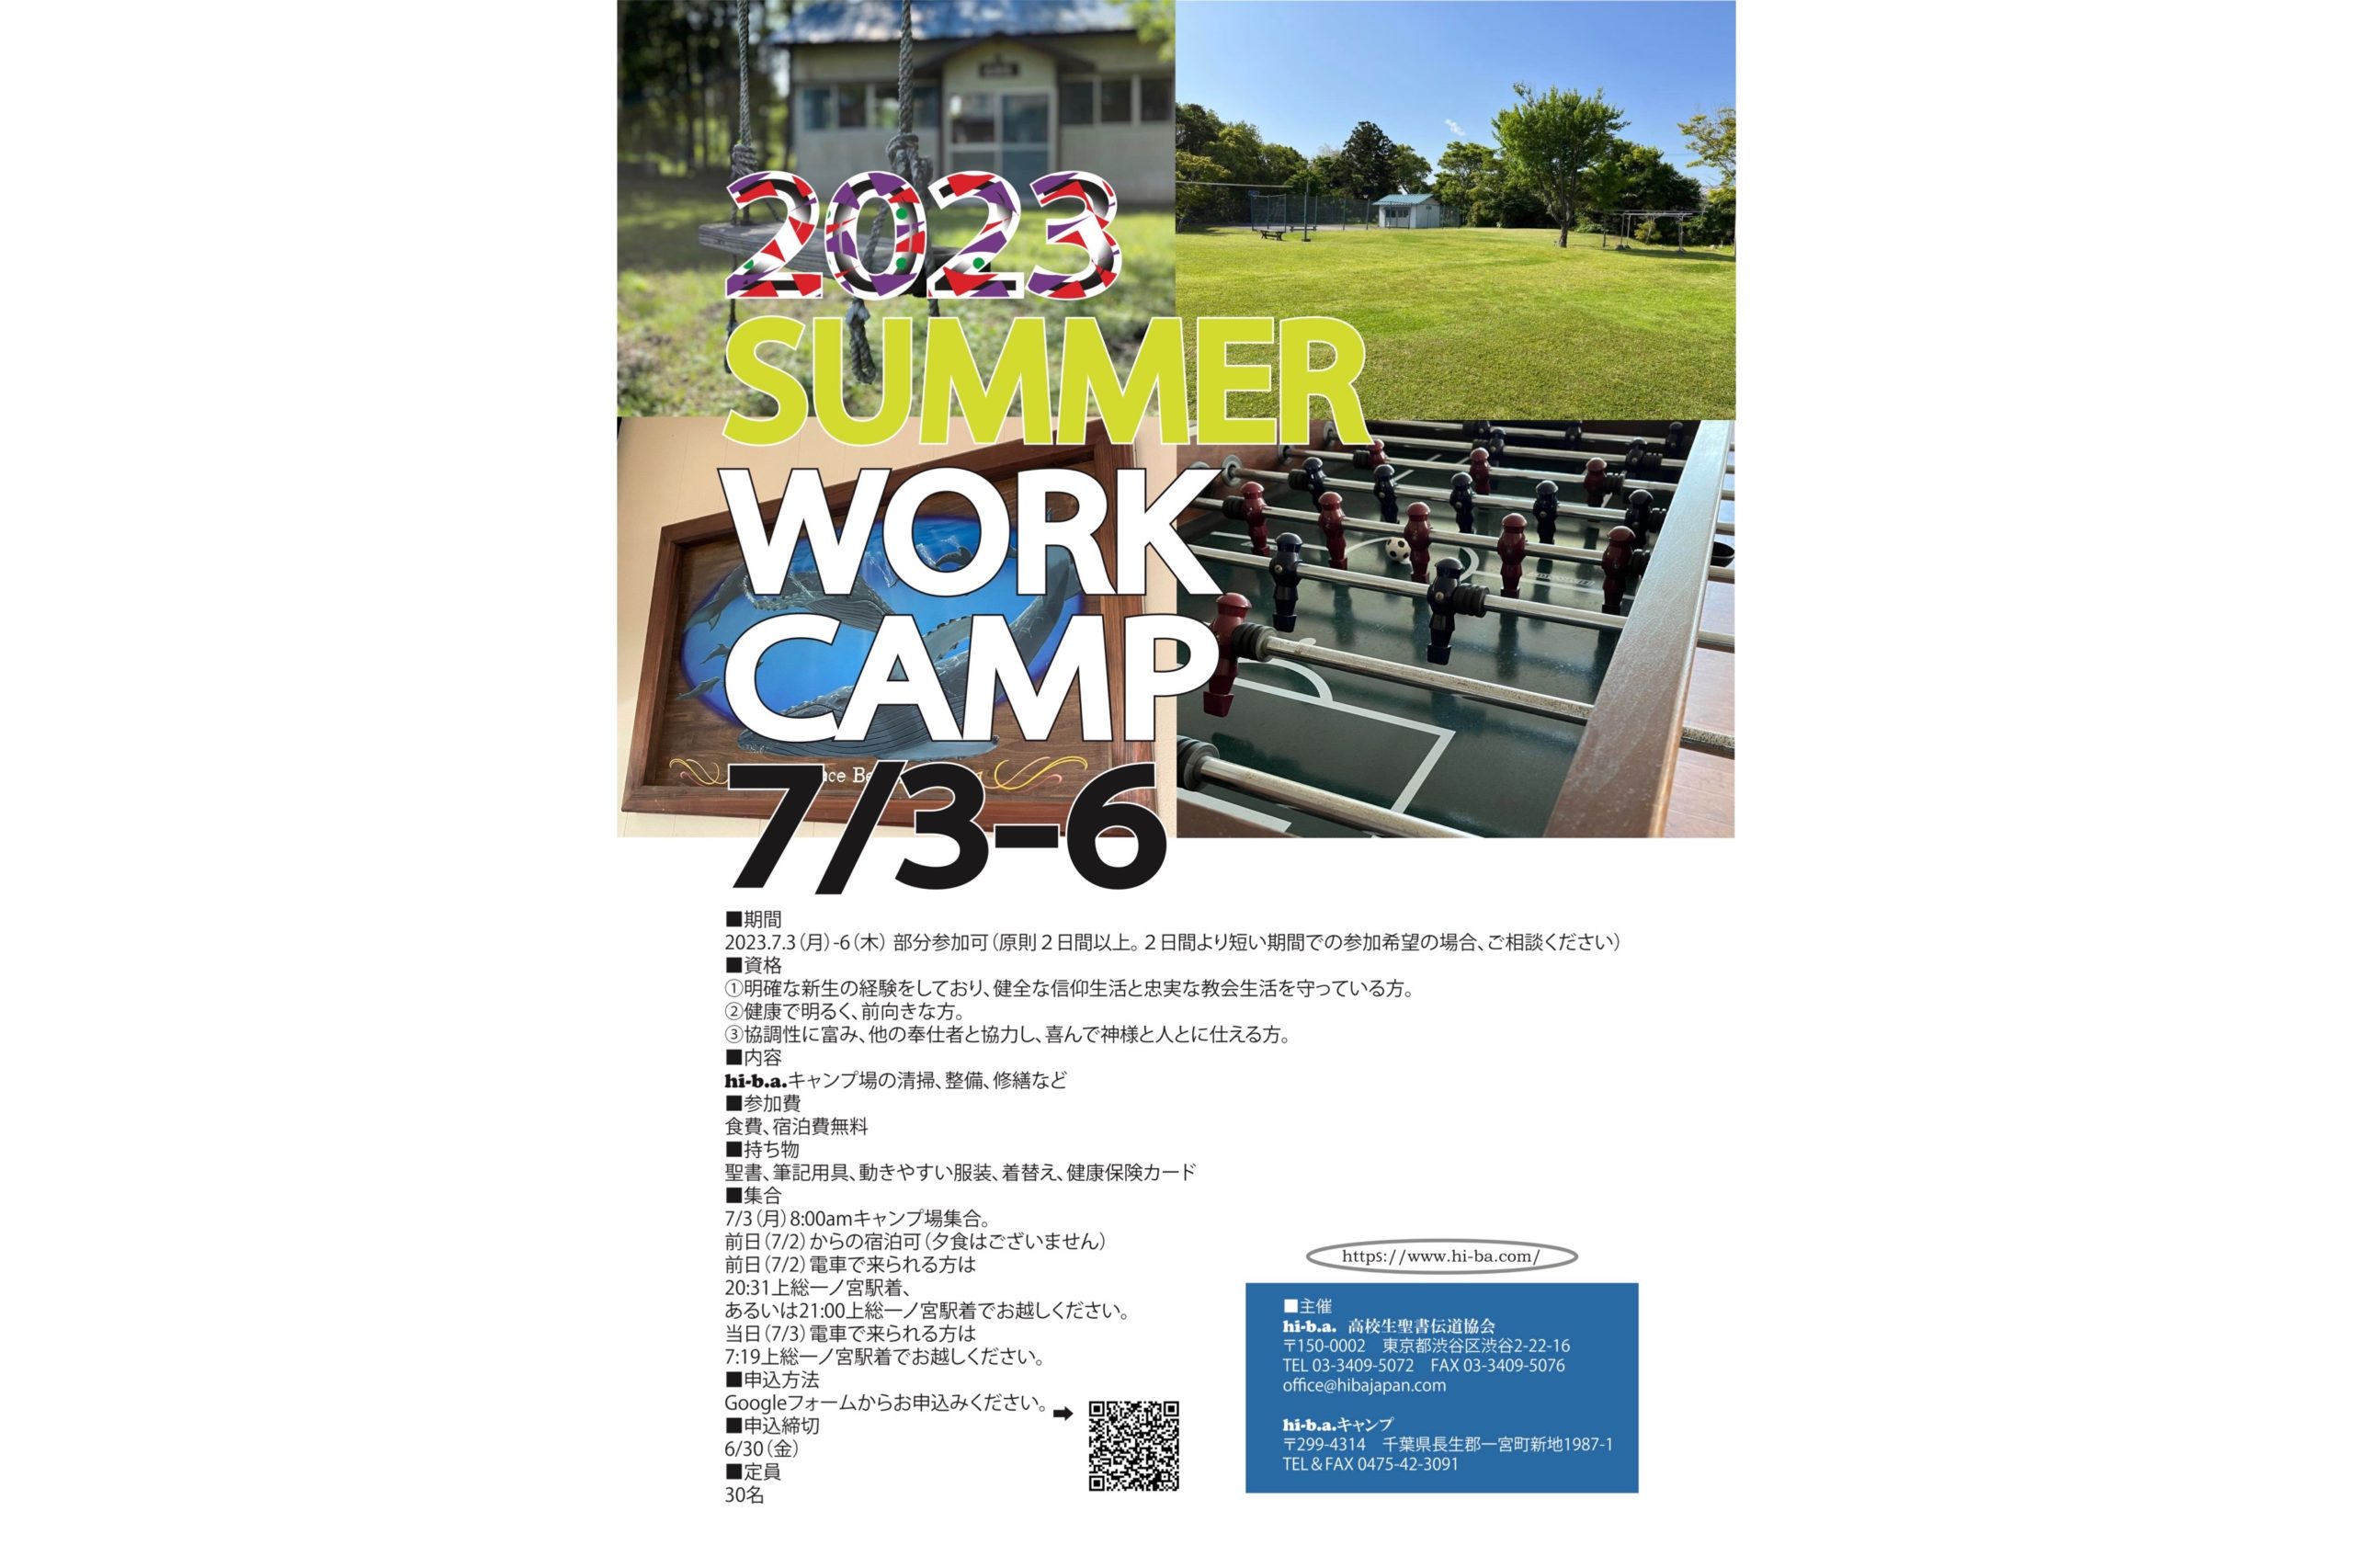 hi-b.a.キャンプ場 WORK CAMP